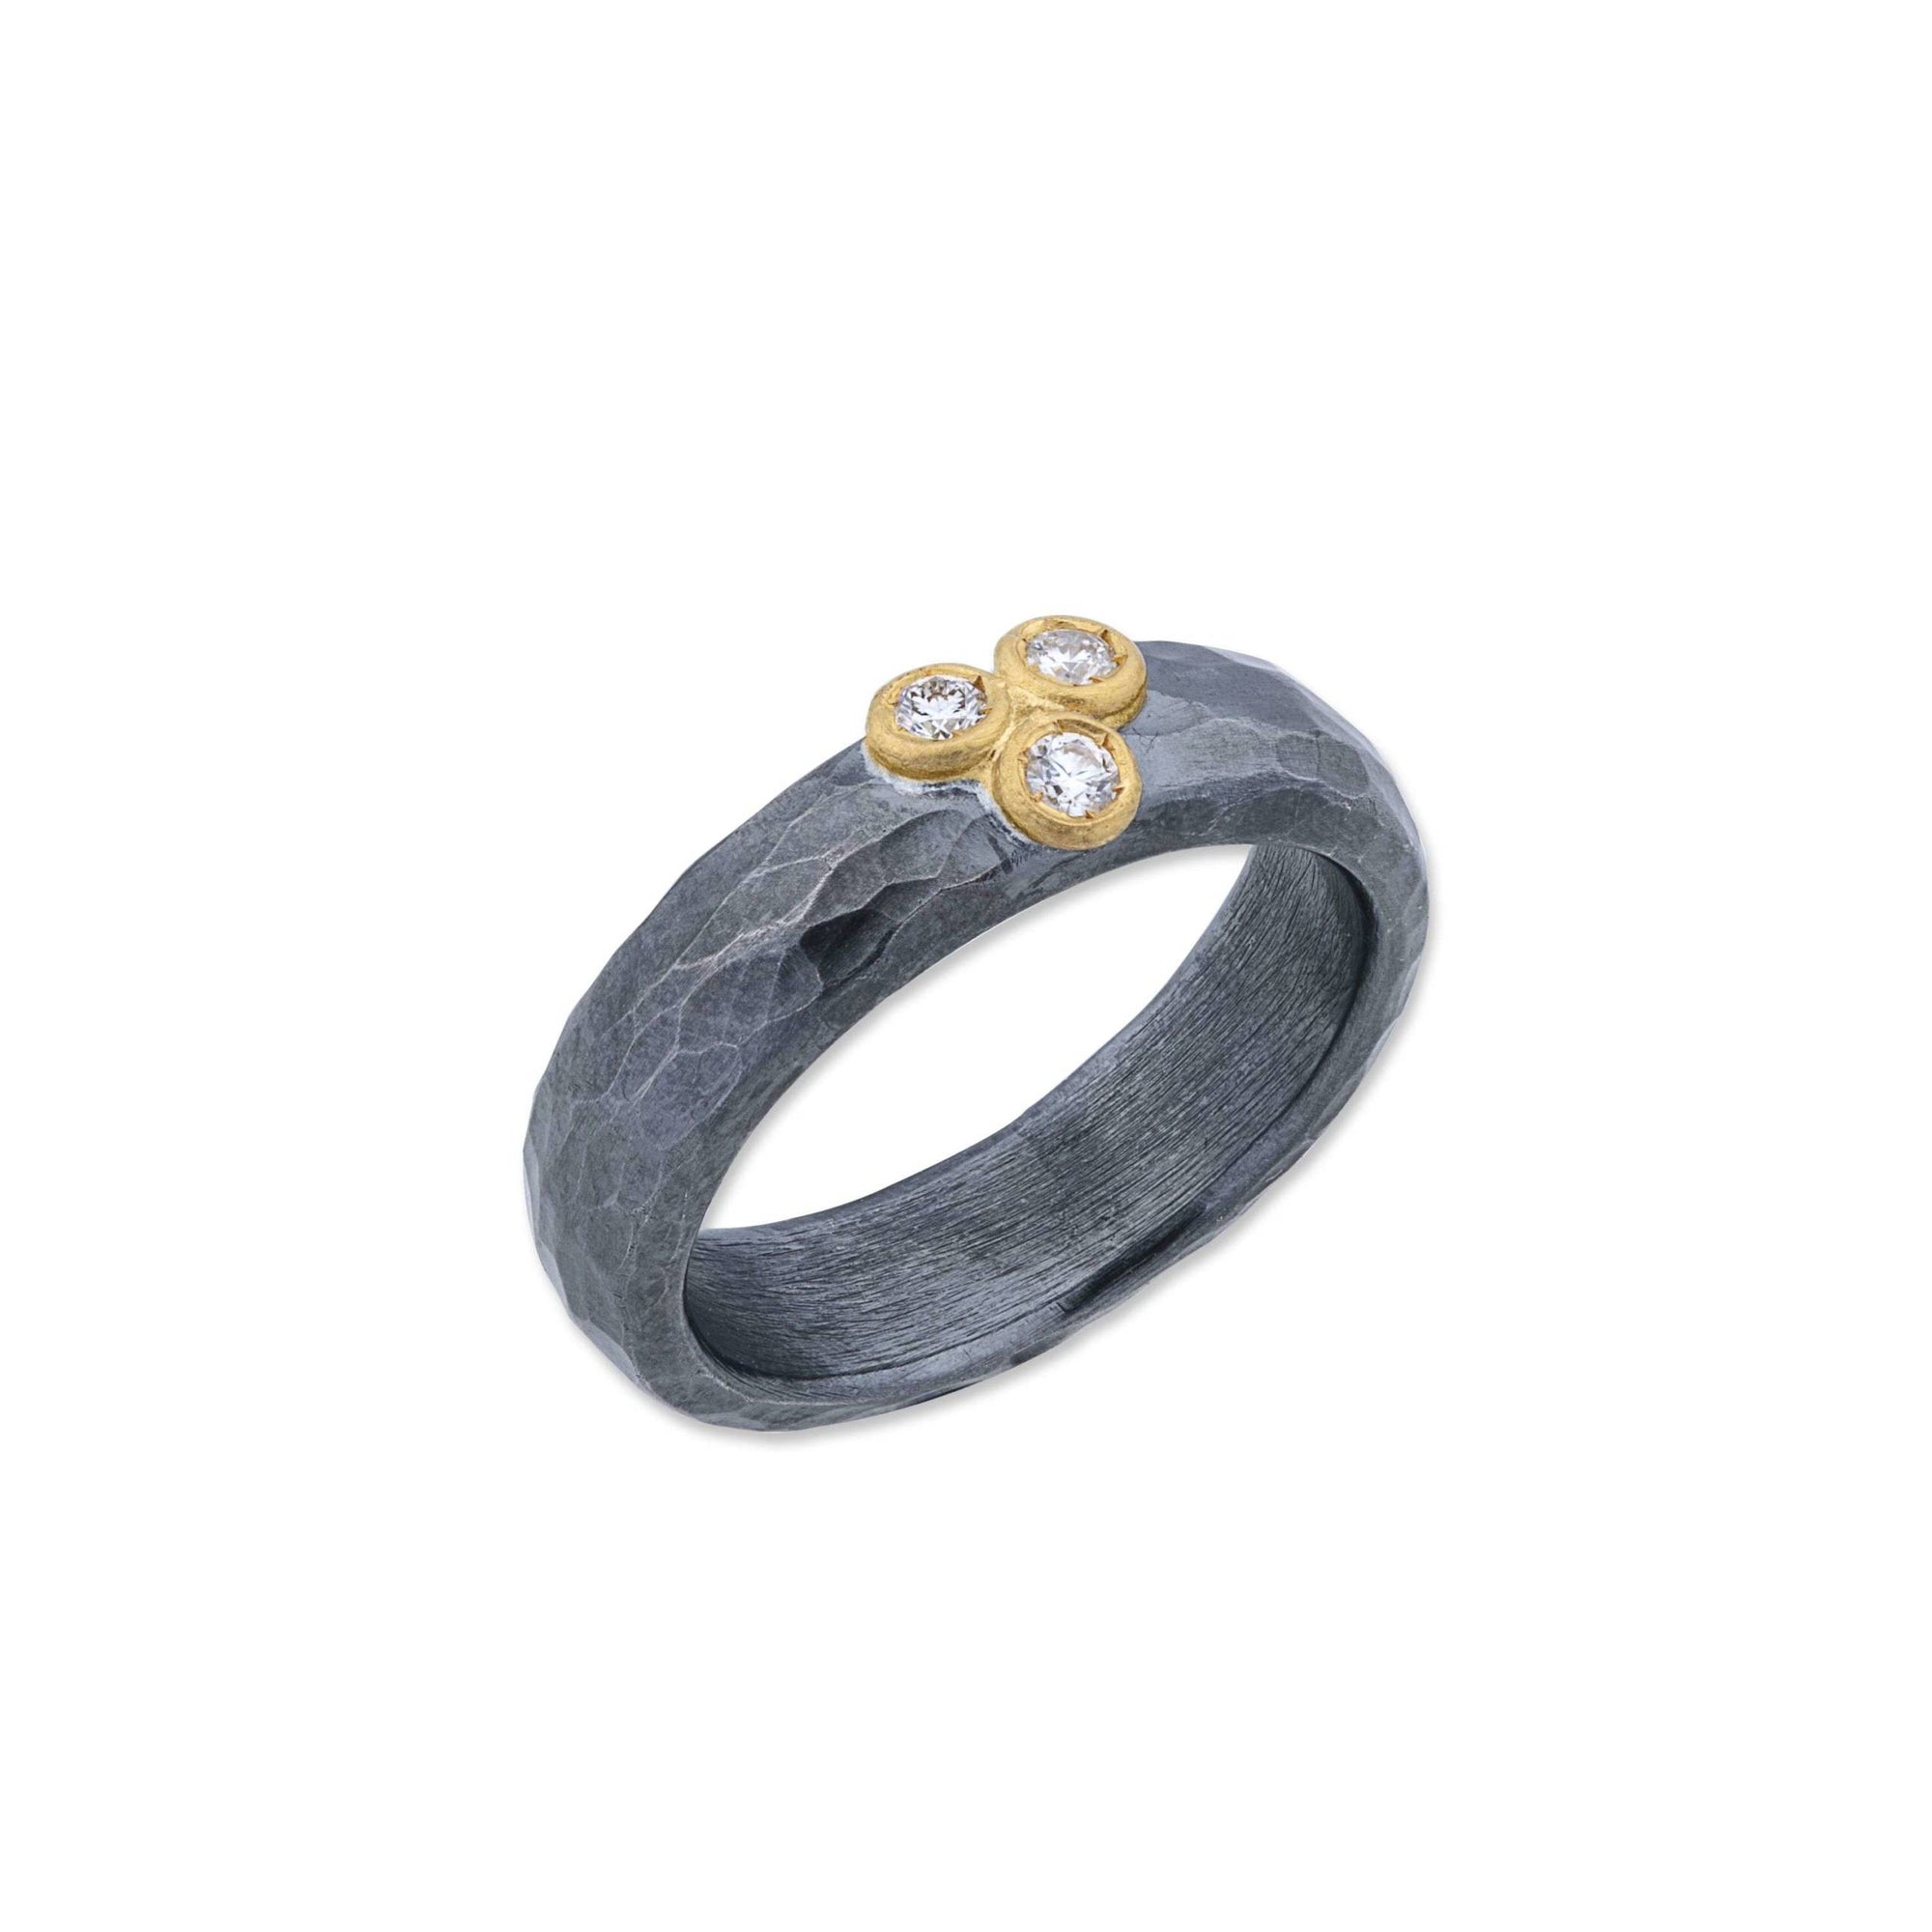 Lika Behar 24K Gold & Oxidized Silver "Random Walk" Diamond Ring